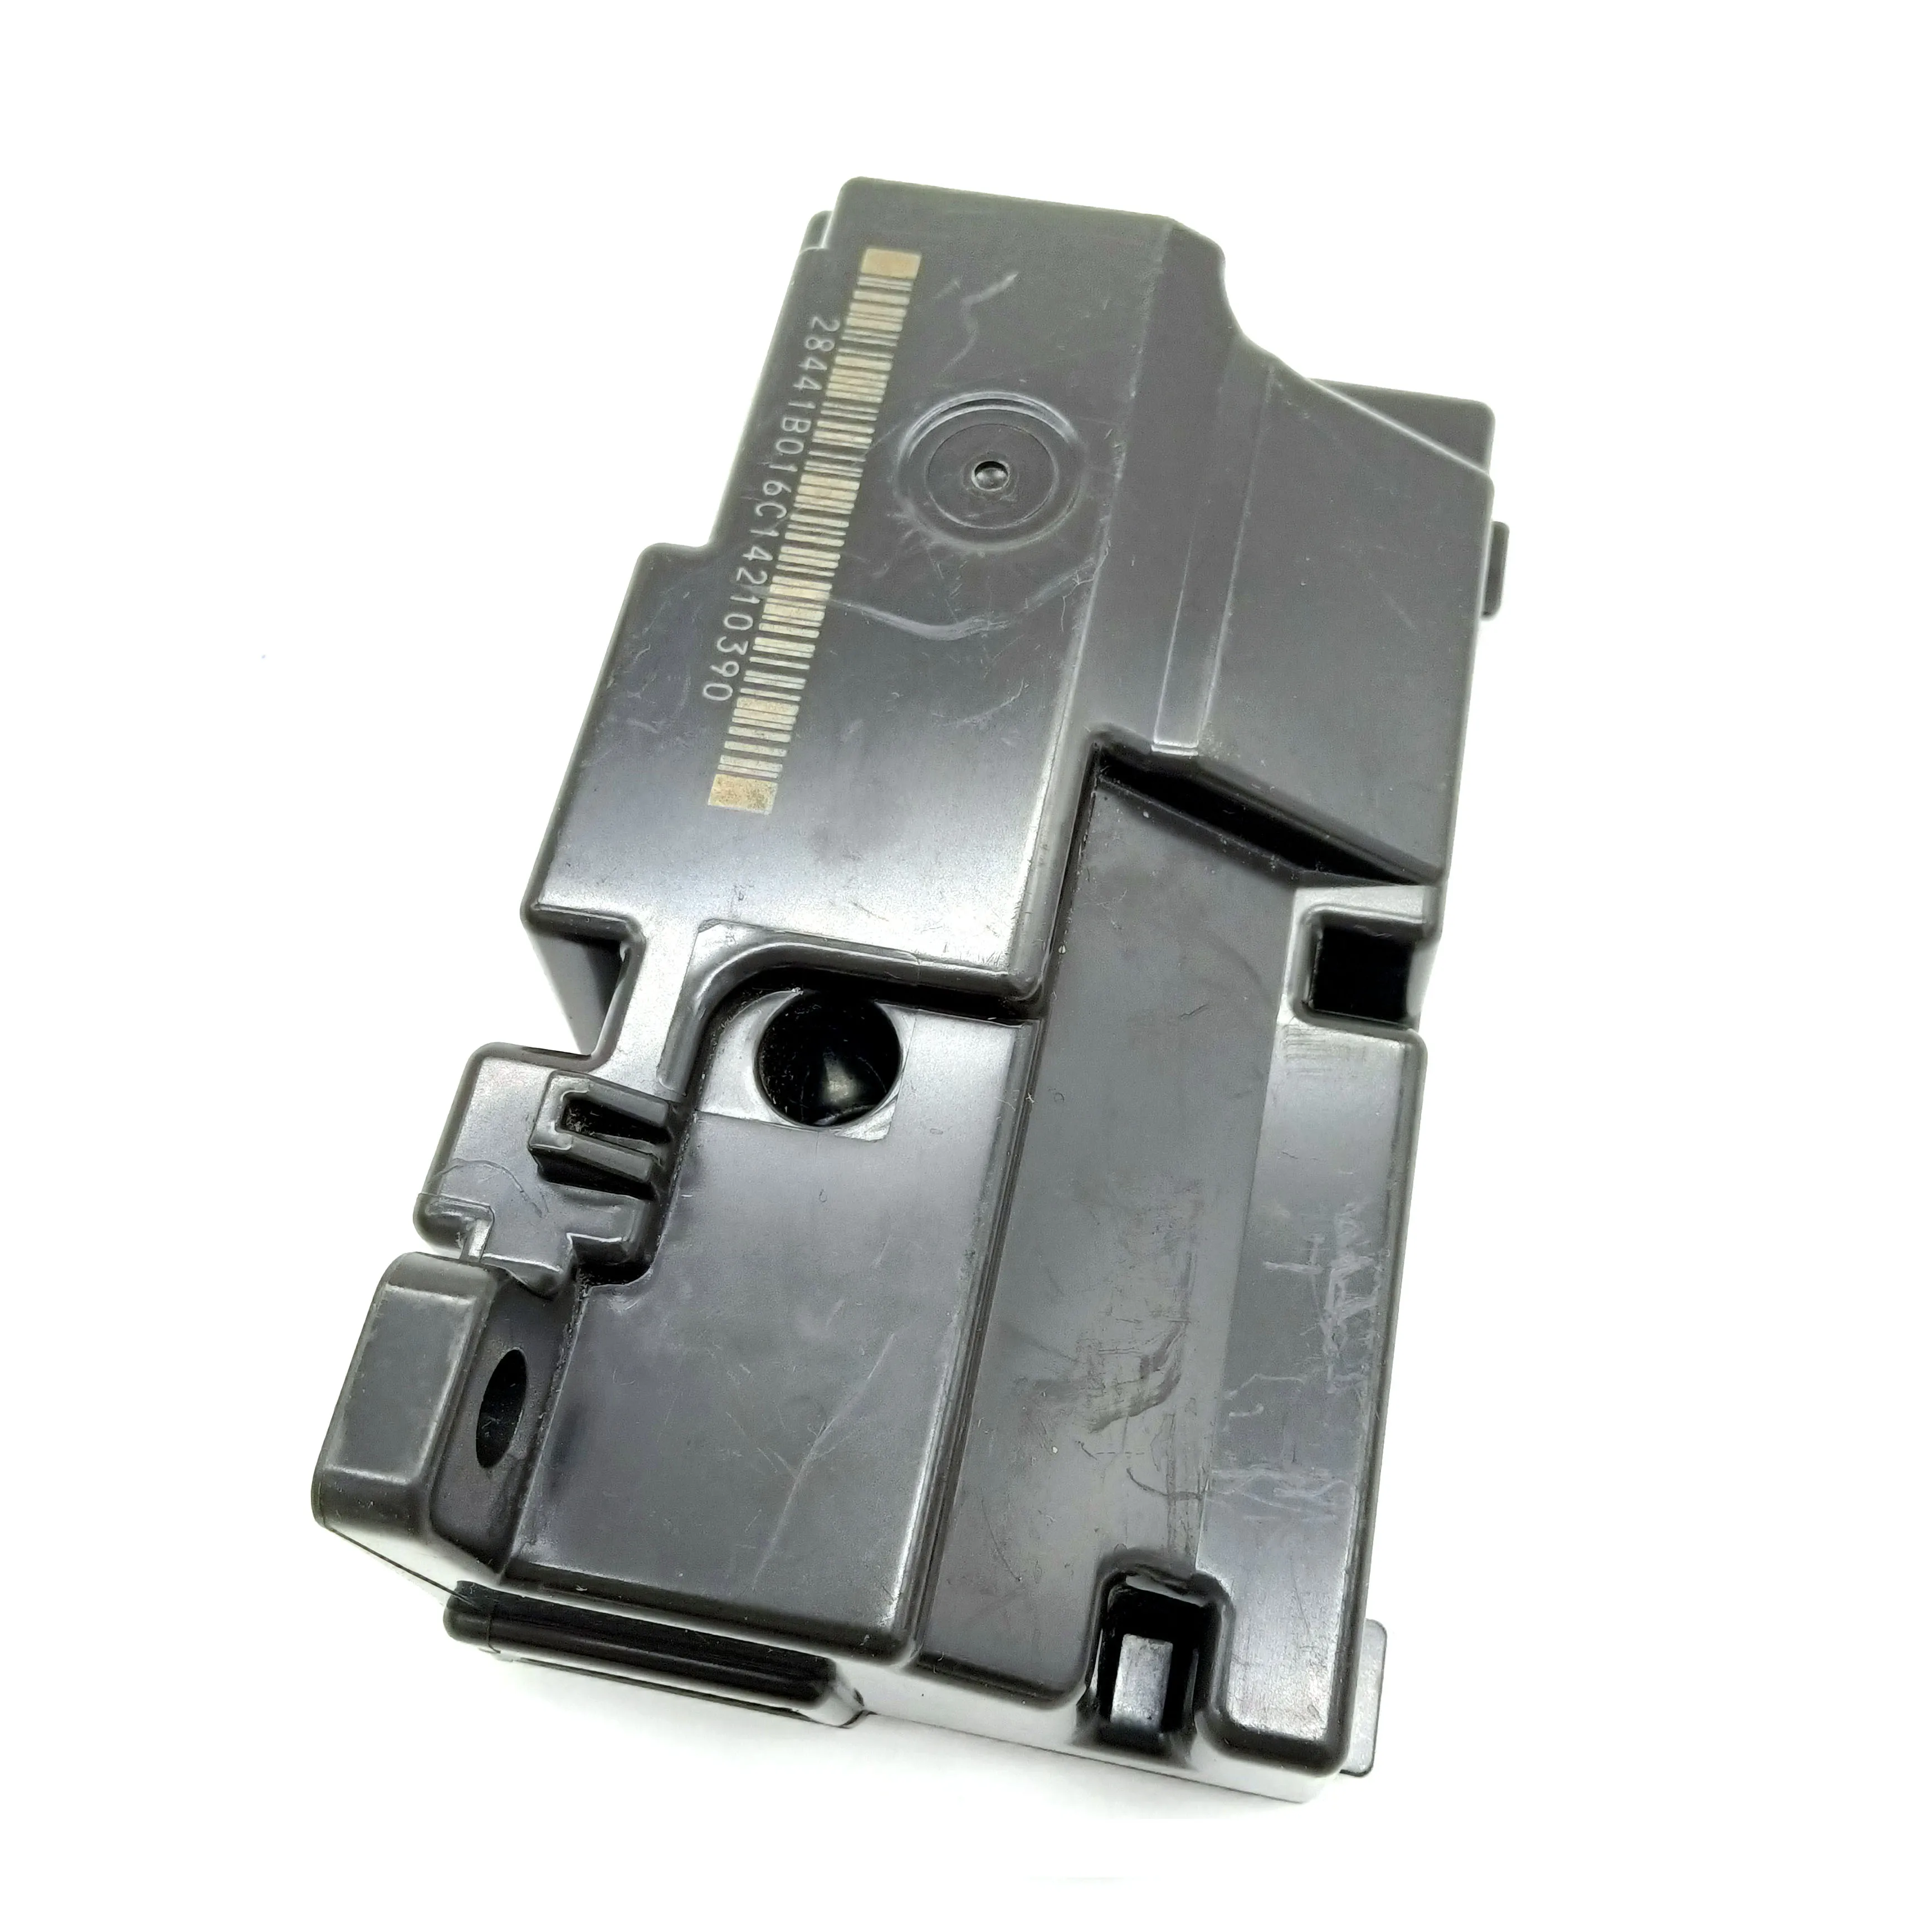 

Power Supply Adapter k30352 Fits For Canon PIXMA IP2820 MG3022 MG2522 IP2820S MG2922 TS3120 TS3122 MG2520 TS202 MG3020 MG2520S